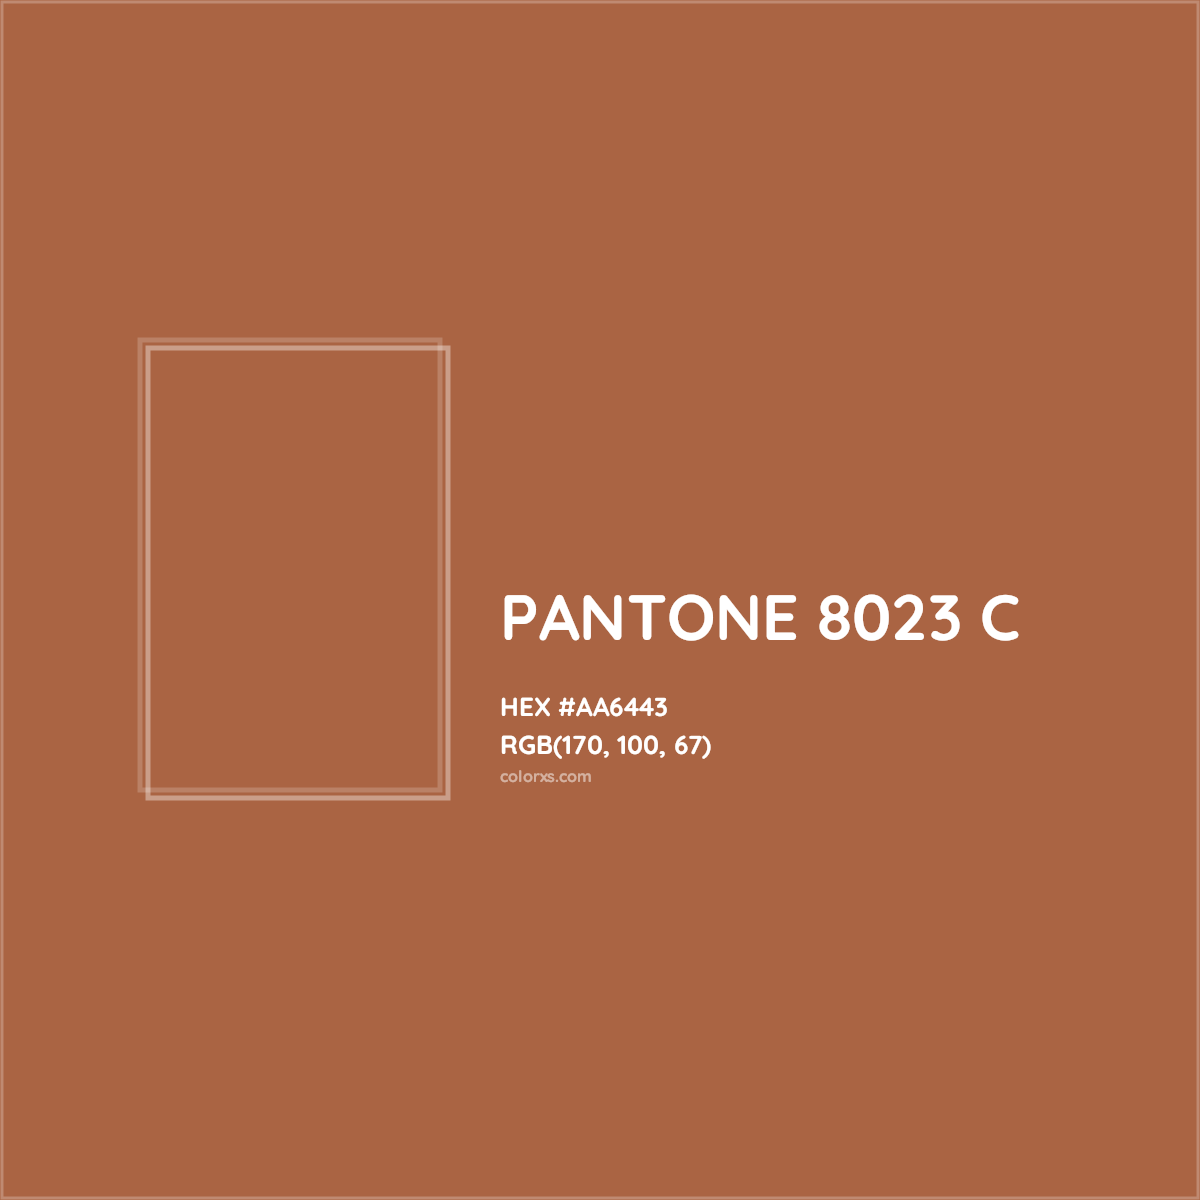 HEX #AA6443 PANTONE 8023 C CMS Pantone PMS - Color Code